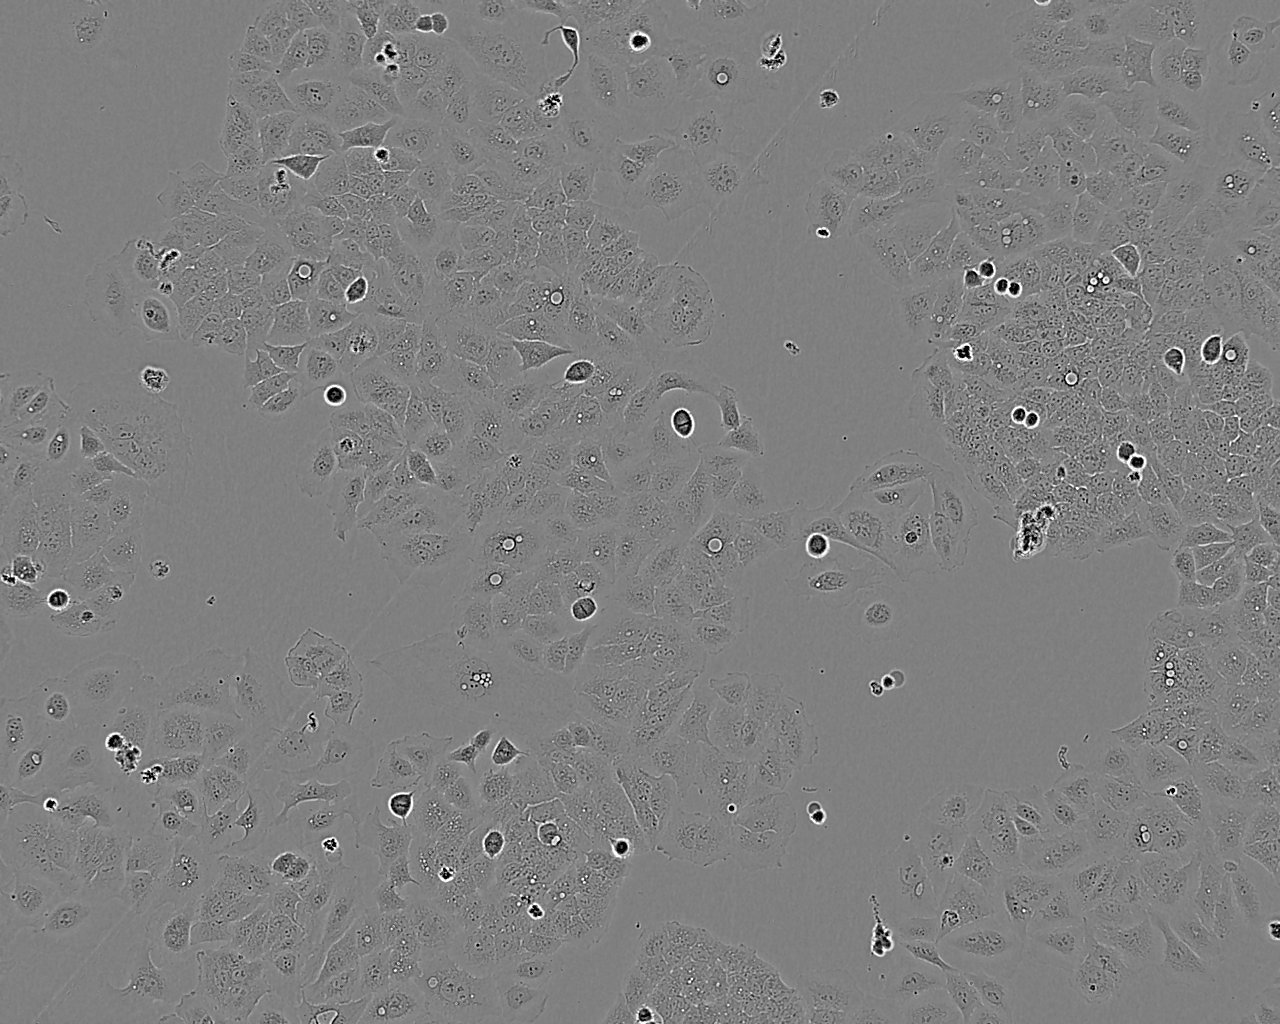 DK-MG 人胶质母细胞瘤细胞系,DK-MG